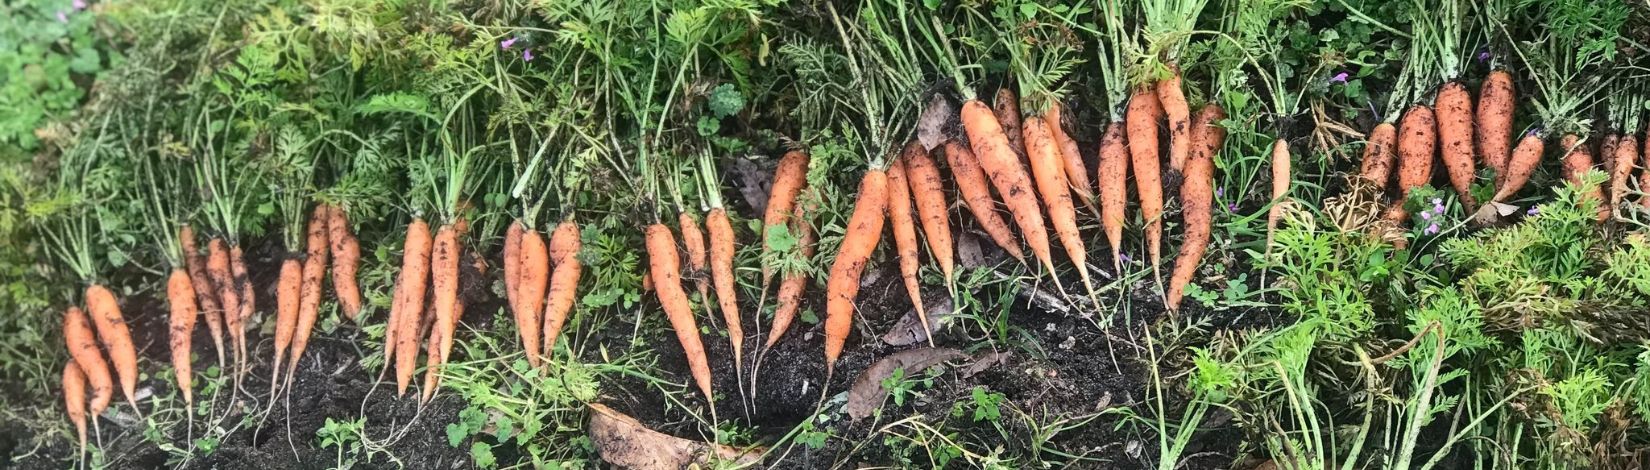 A row of freshly dug up orange carrots